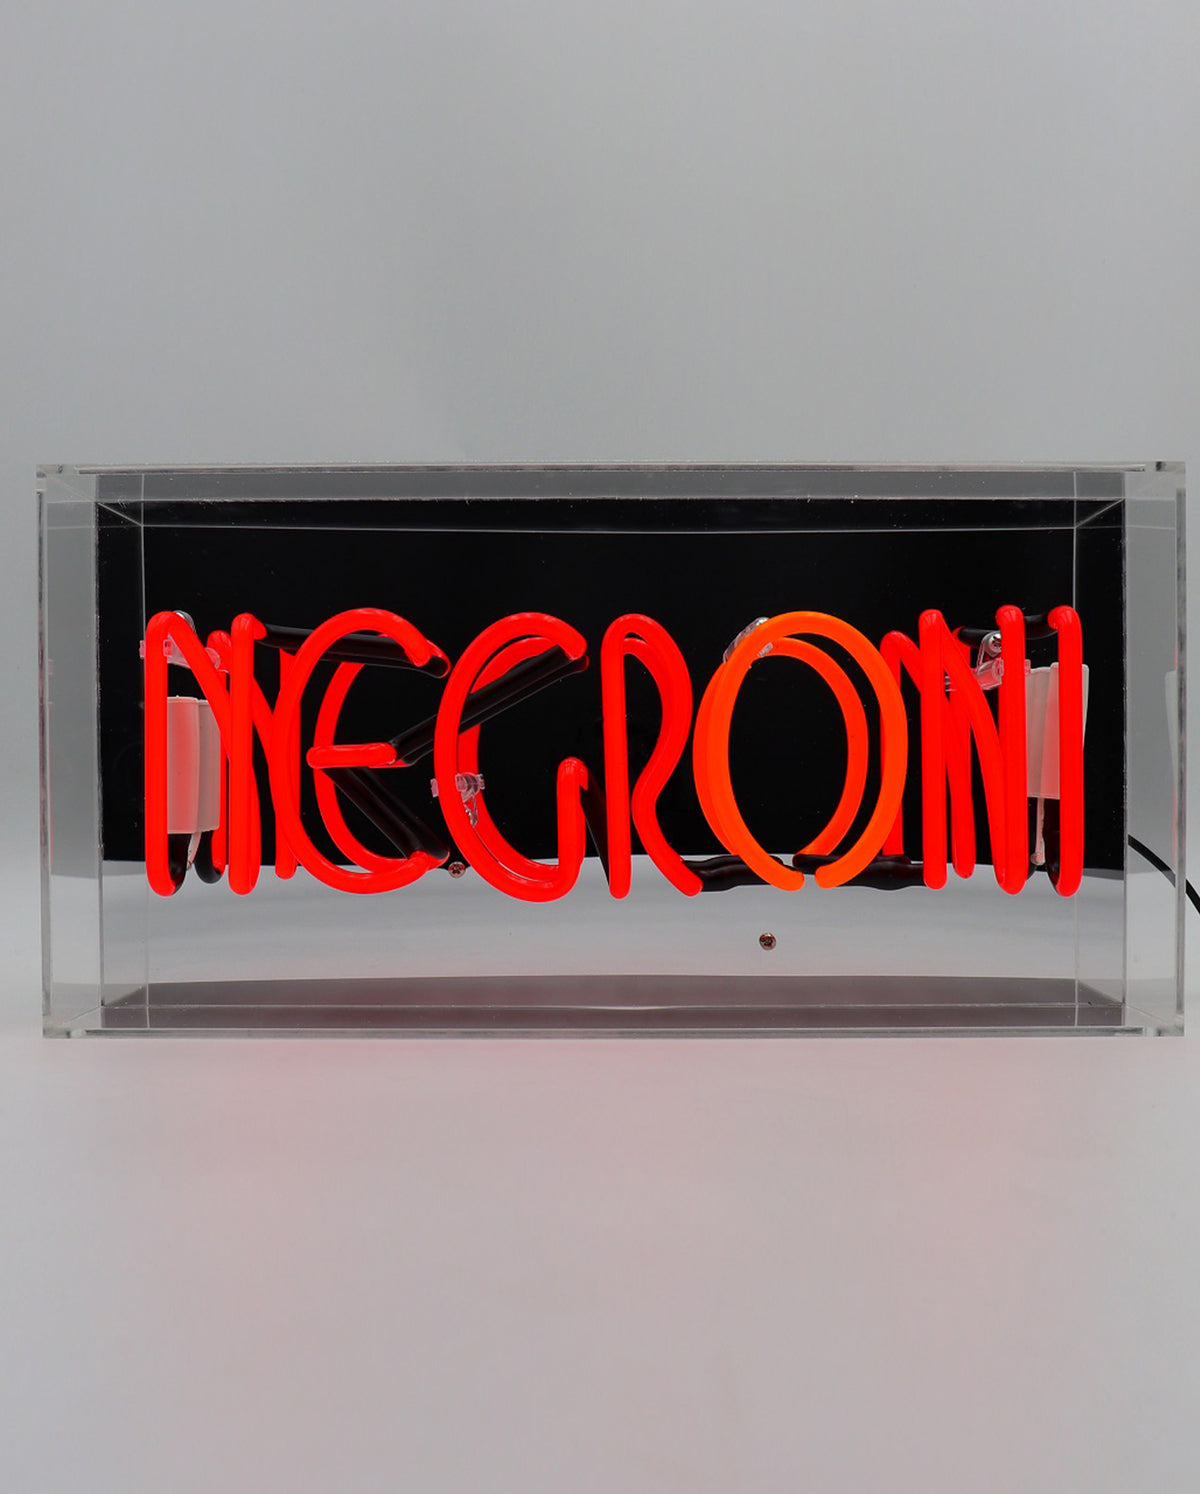 Negroni Red & Orange Neon